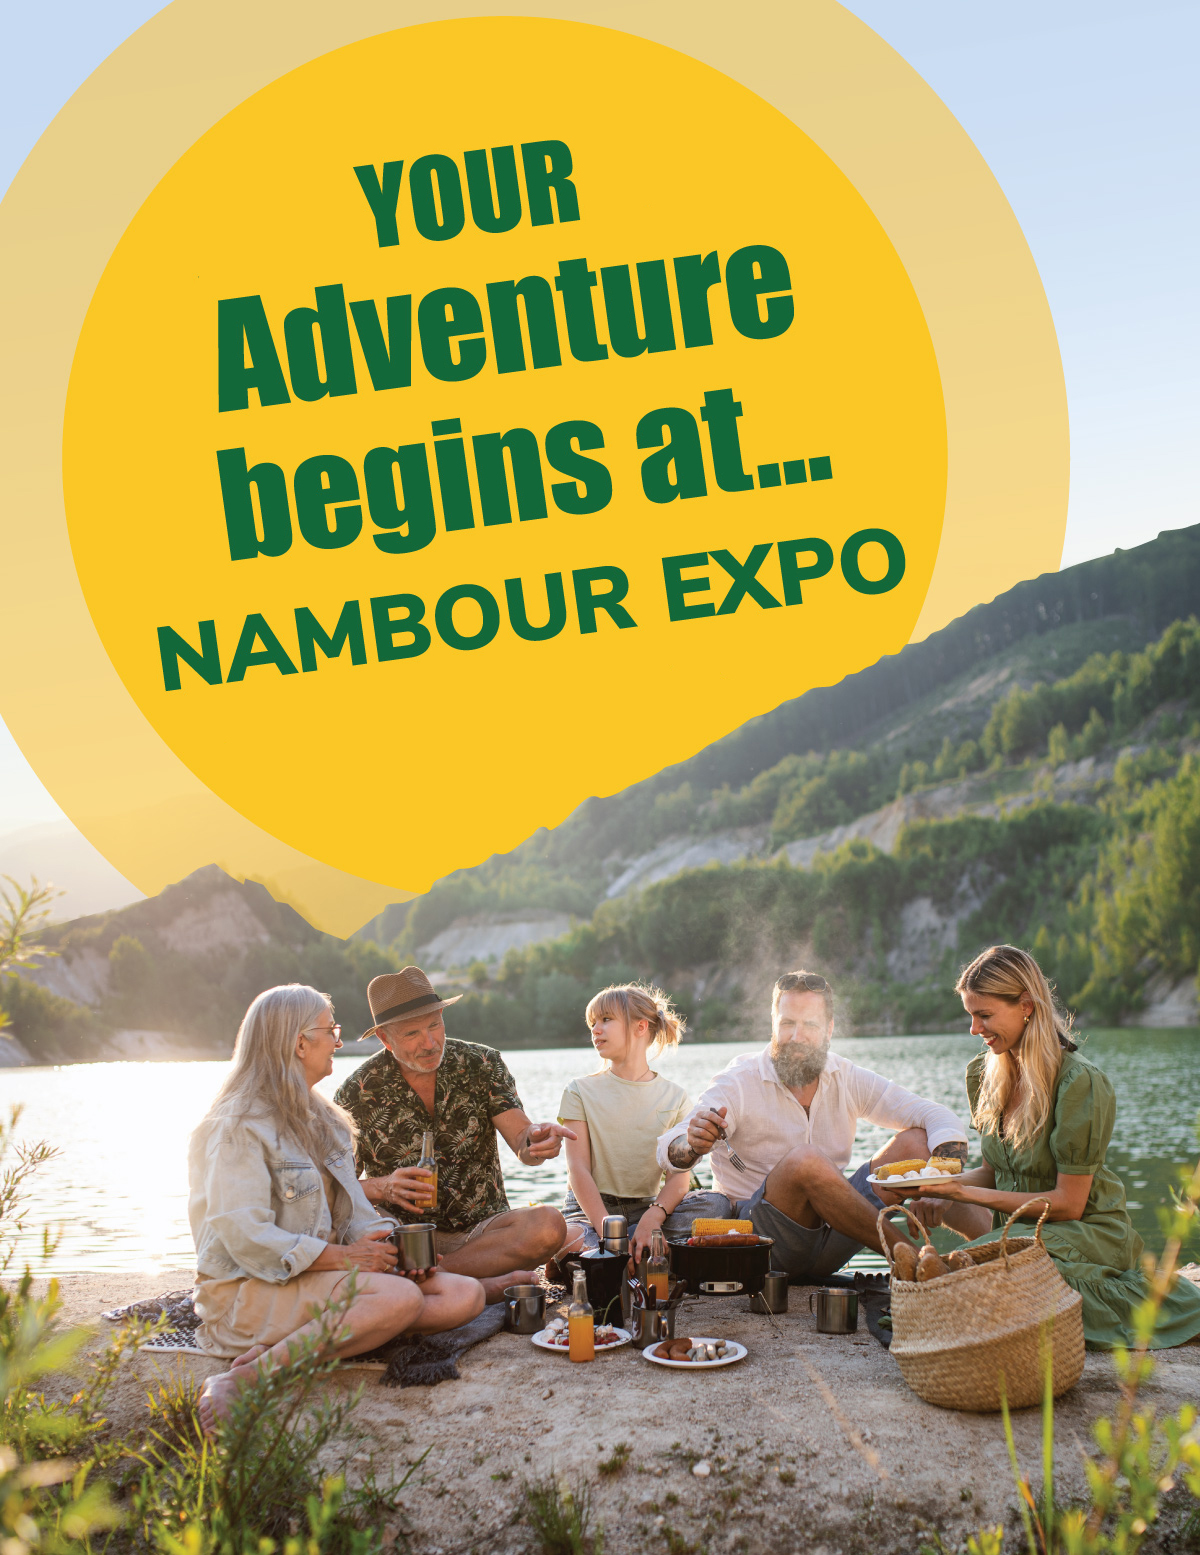 Nambour Expo